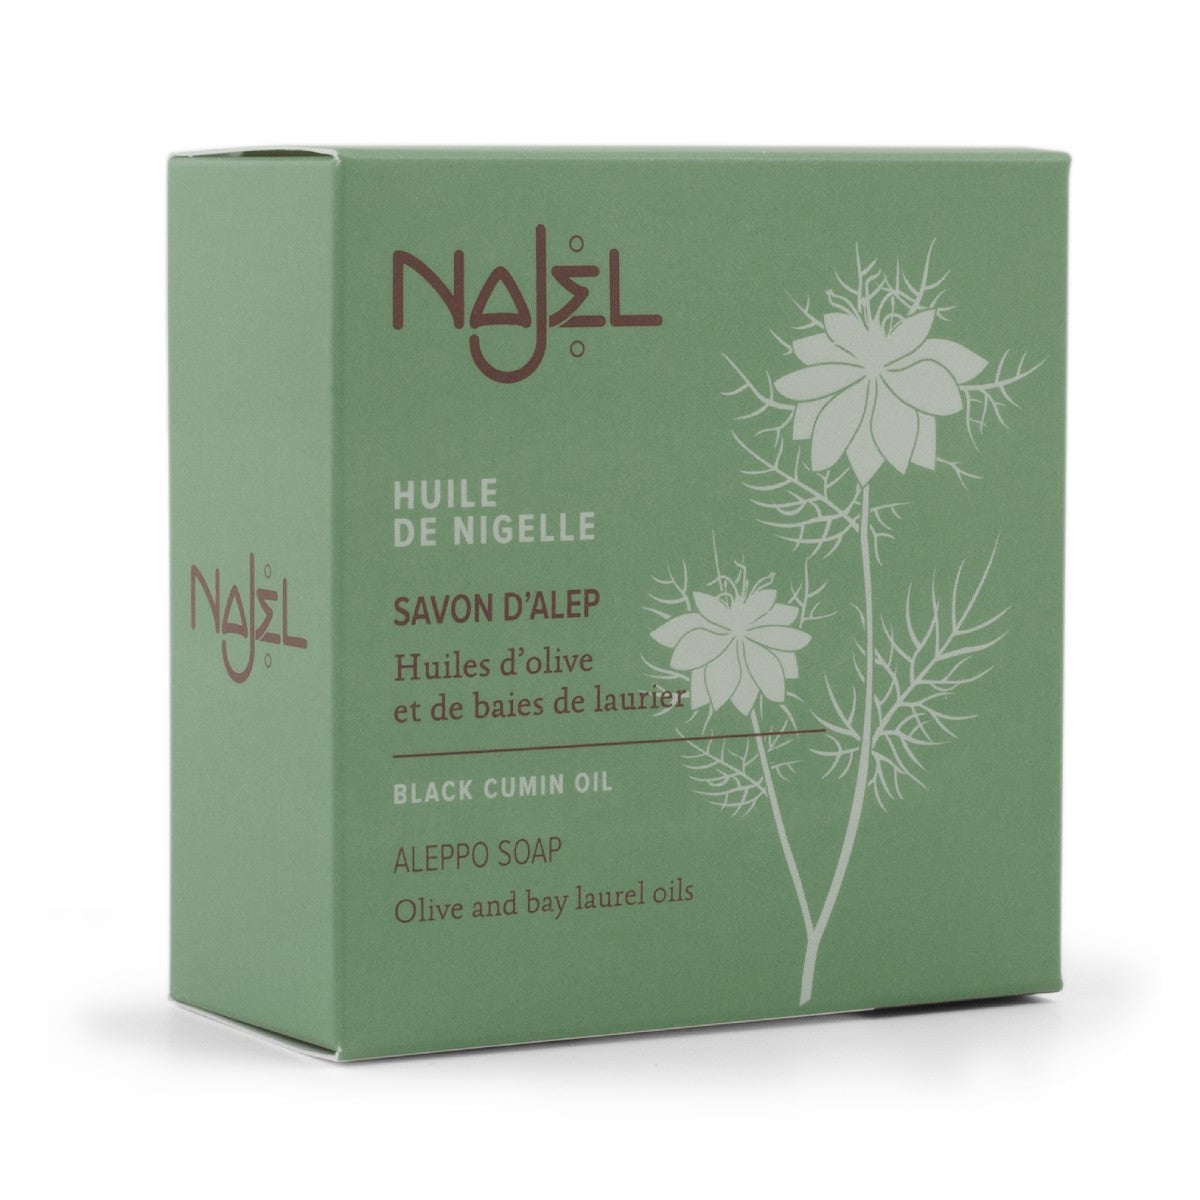 NAJEL Organic Skincare - Aleppo Soap Black Cumin Oil, 100g, Organic, Vegan